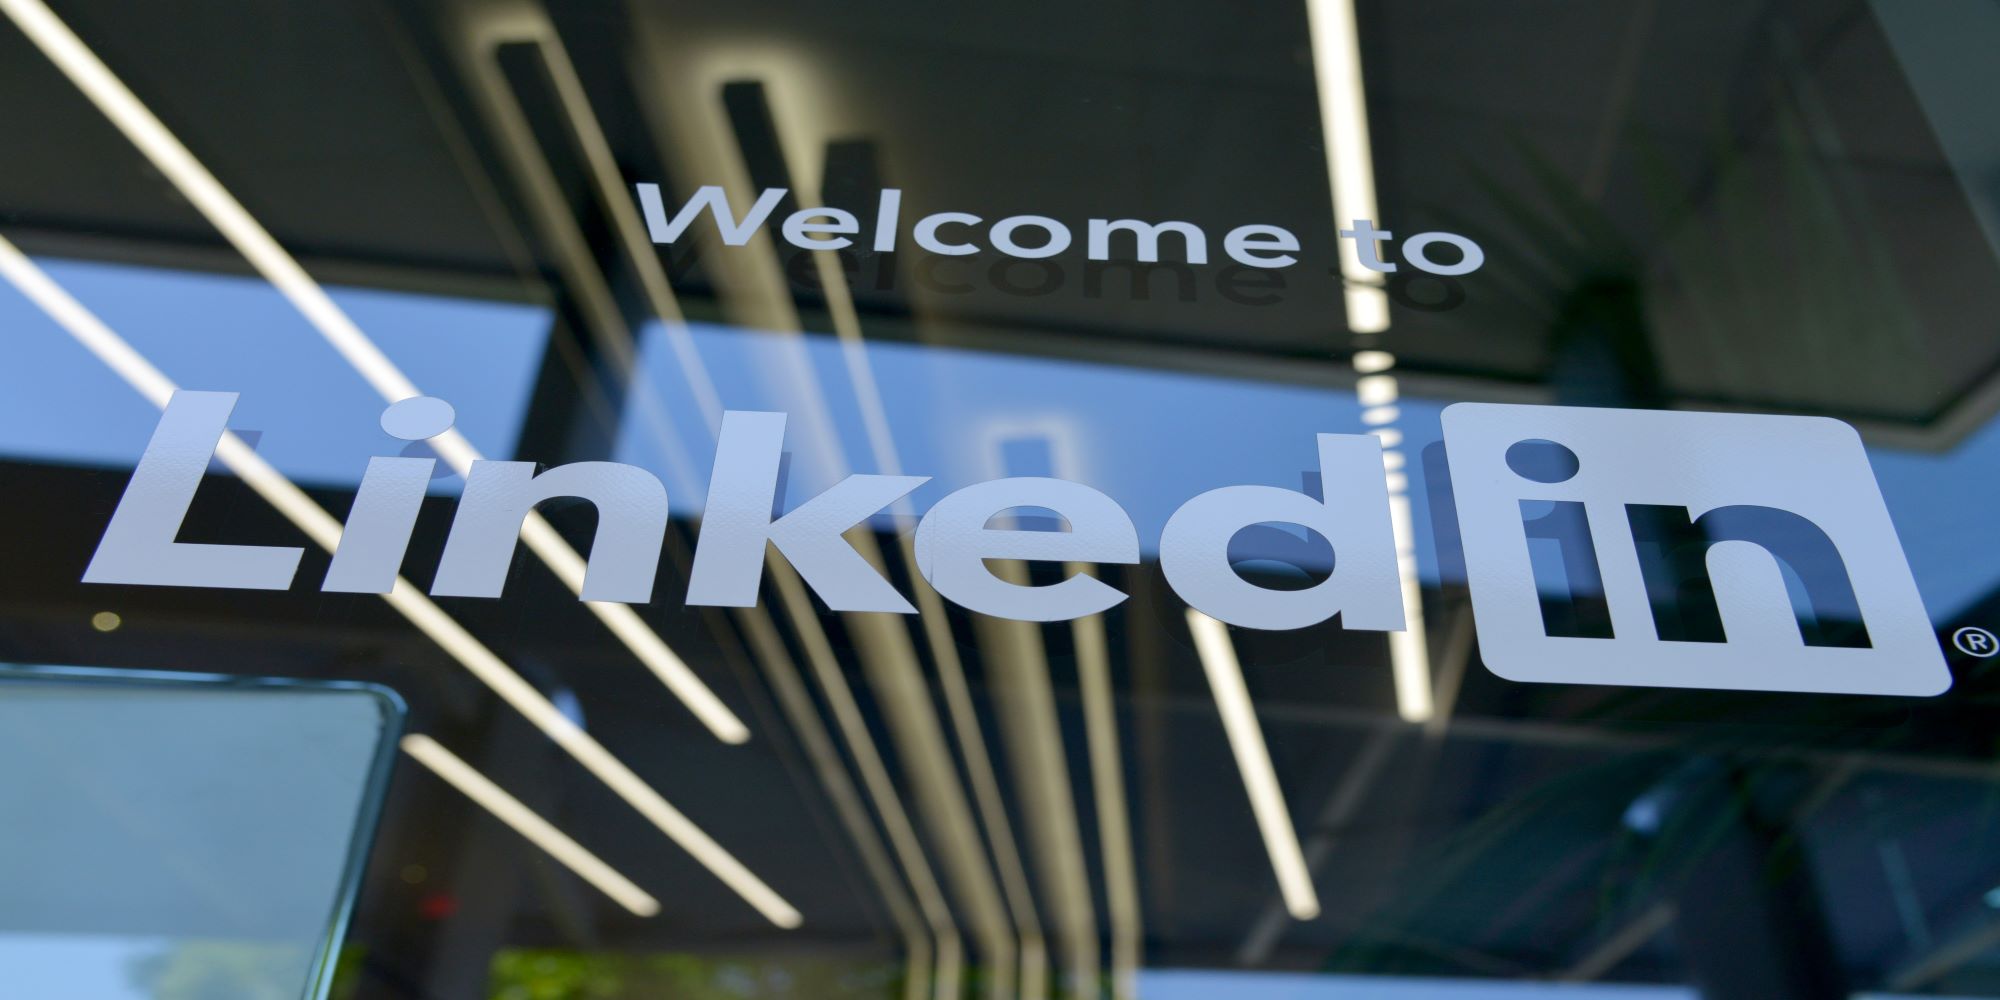 International Marketing News: LinkedIn Launches Chinese Job App